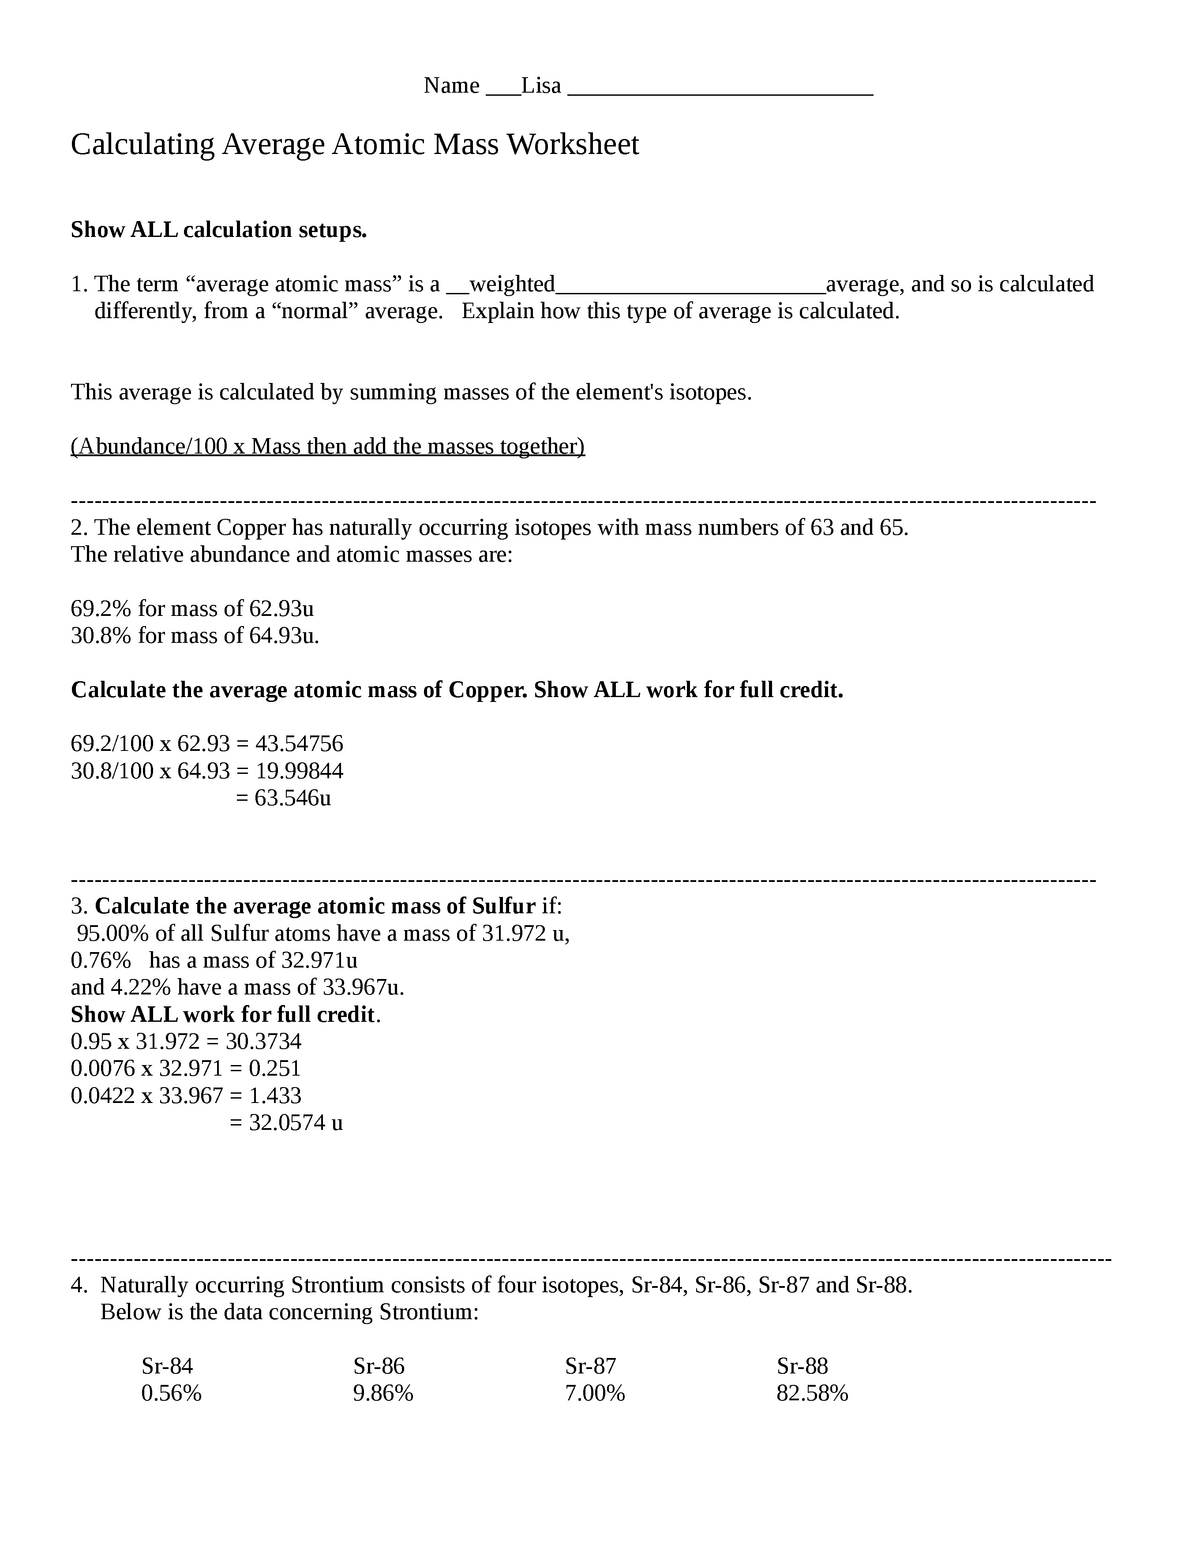 Calculating Average Atomic Mass Worksheet - CHEM 21 - Physical Throughout Average Atomic Mass Worksheet Answers